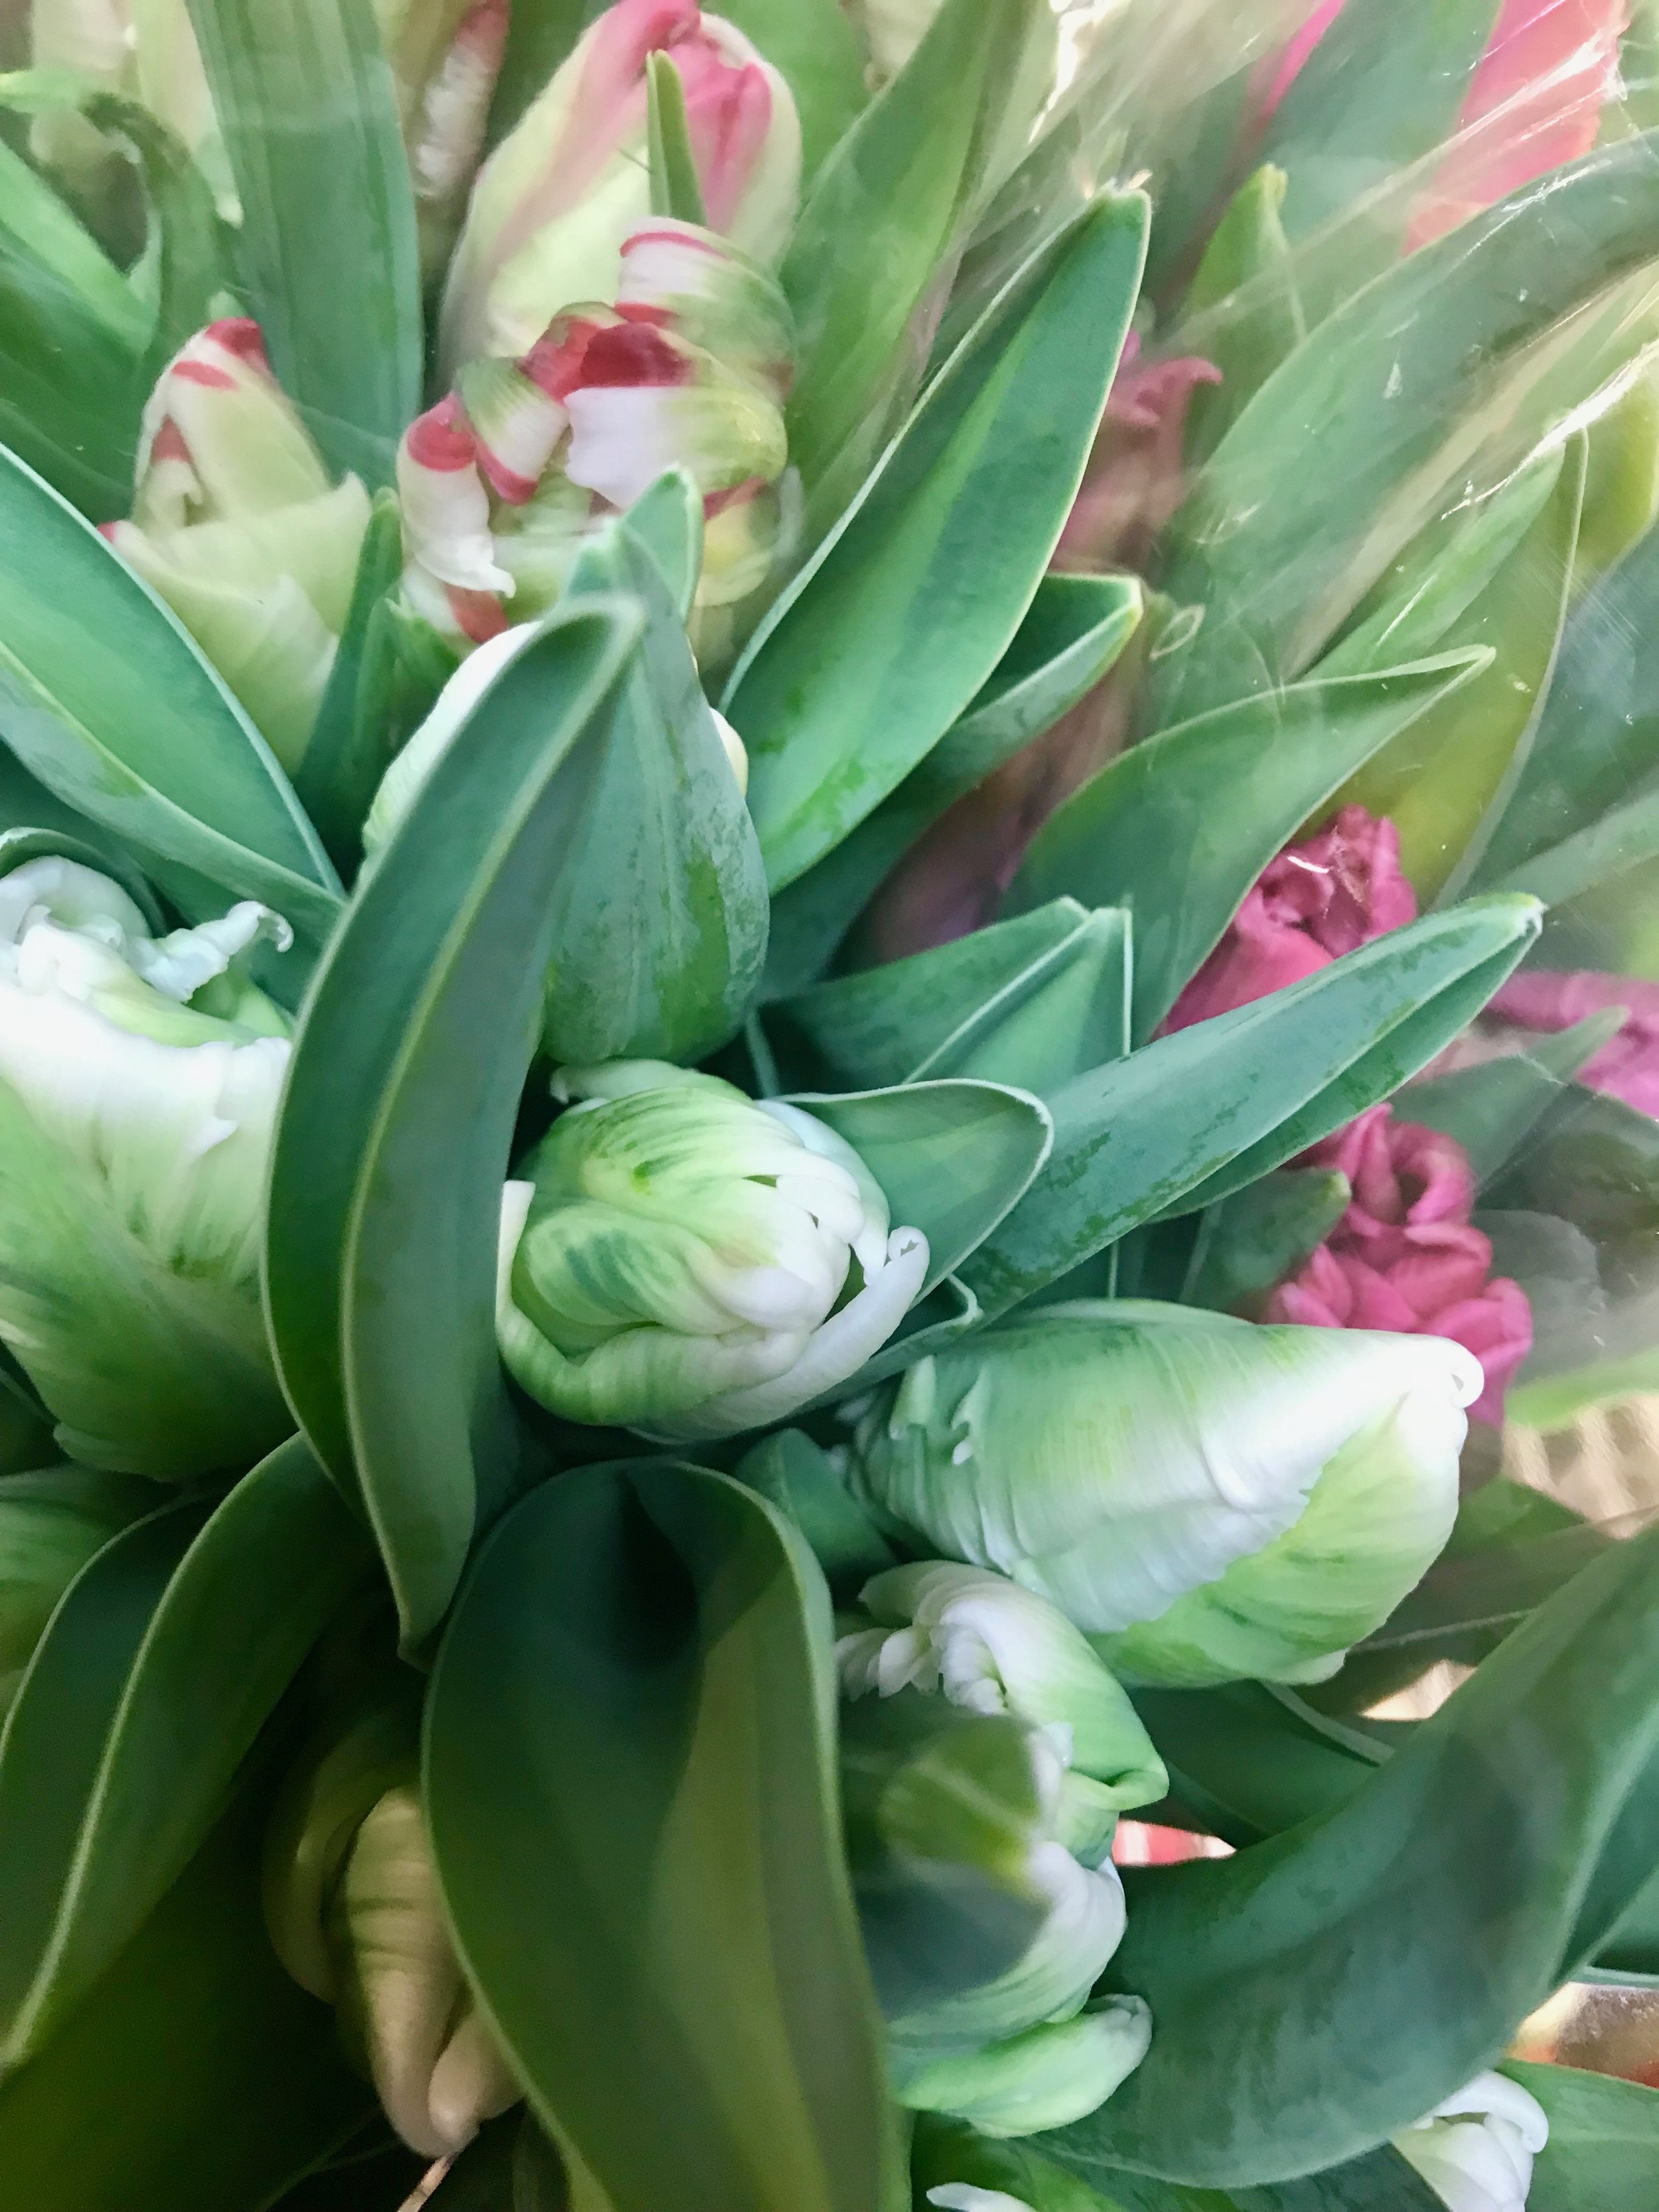 Blog Post — What's New - Croton Florist — Upper Village Blooms